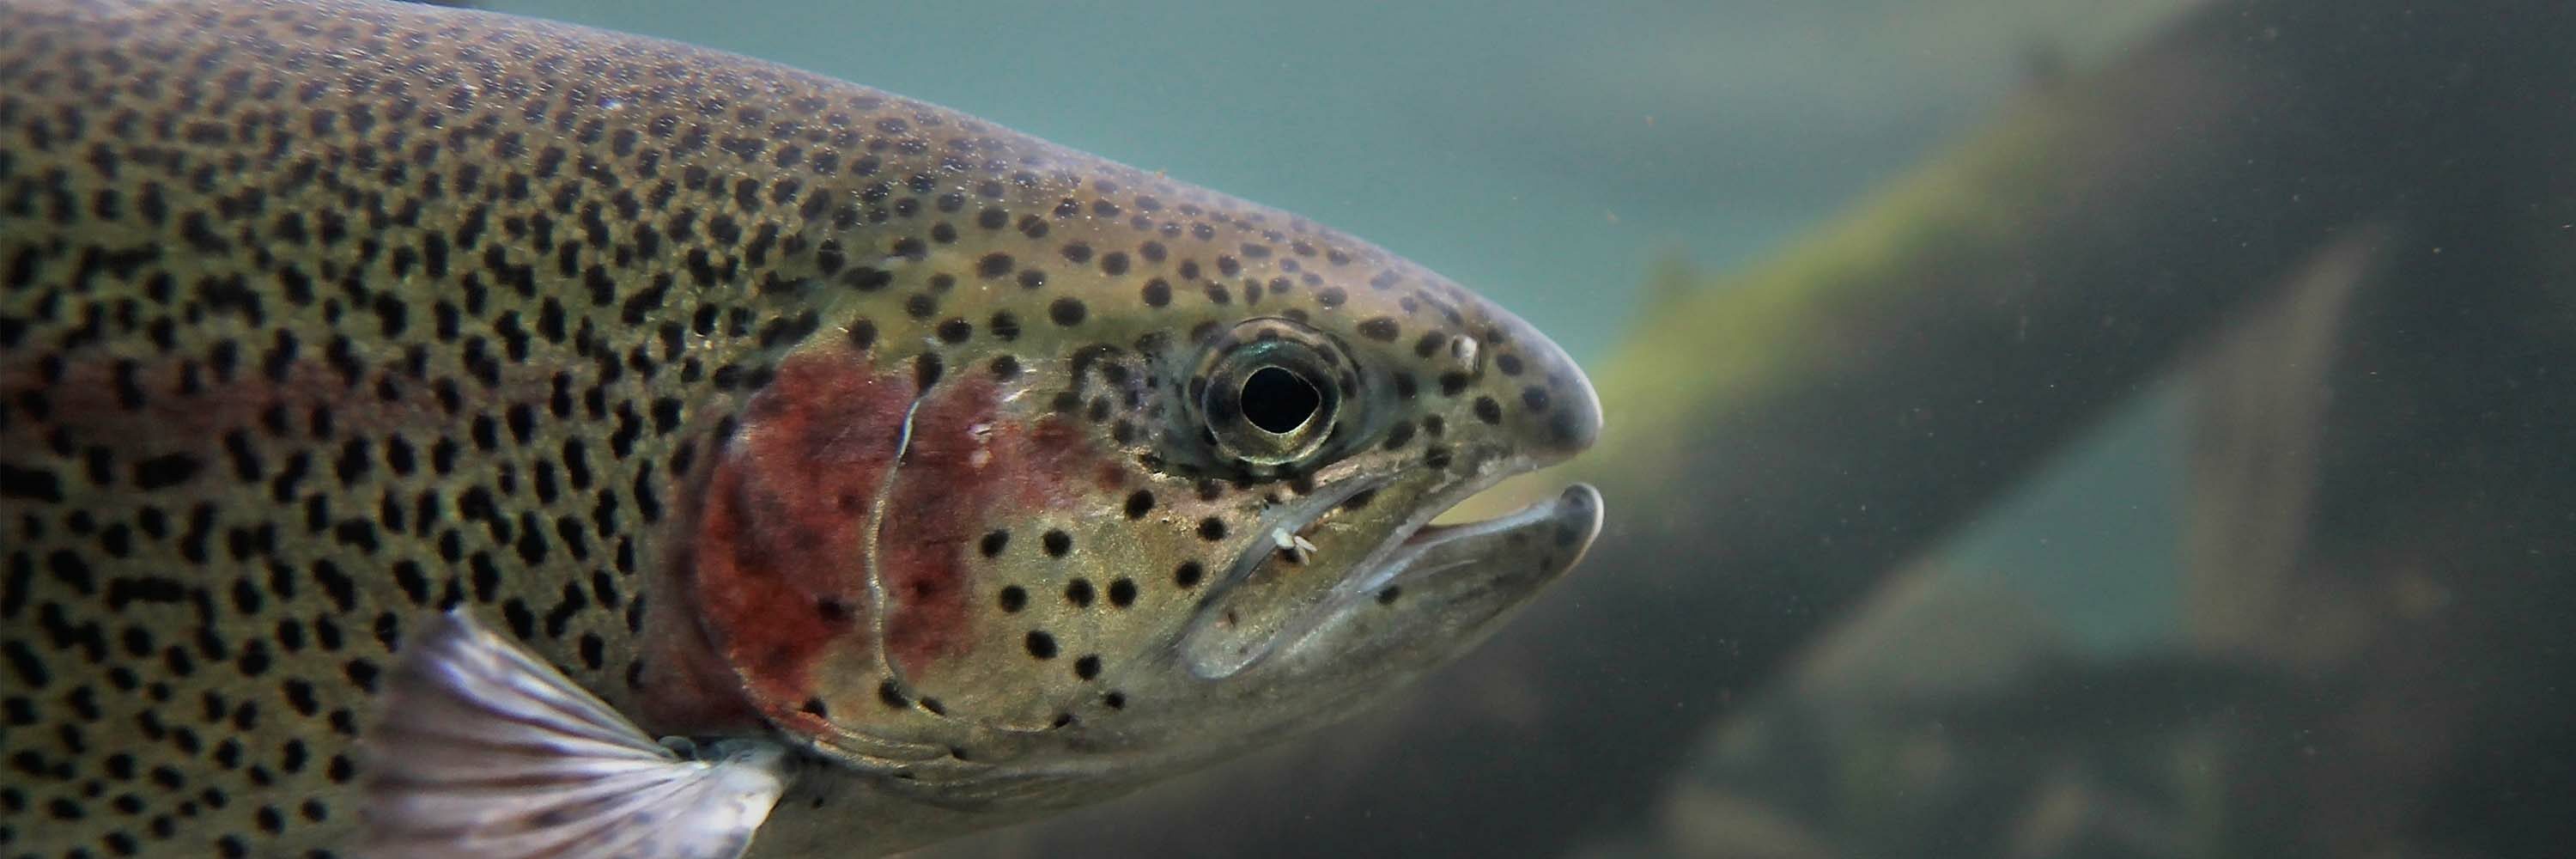 Oregon Senate Hears Fish Welfare Plea, Animal Equality Co-presents